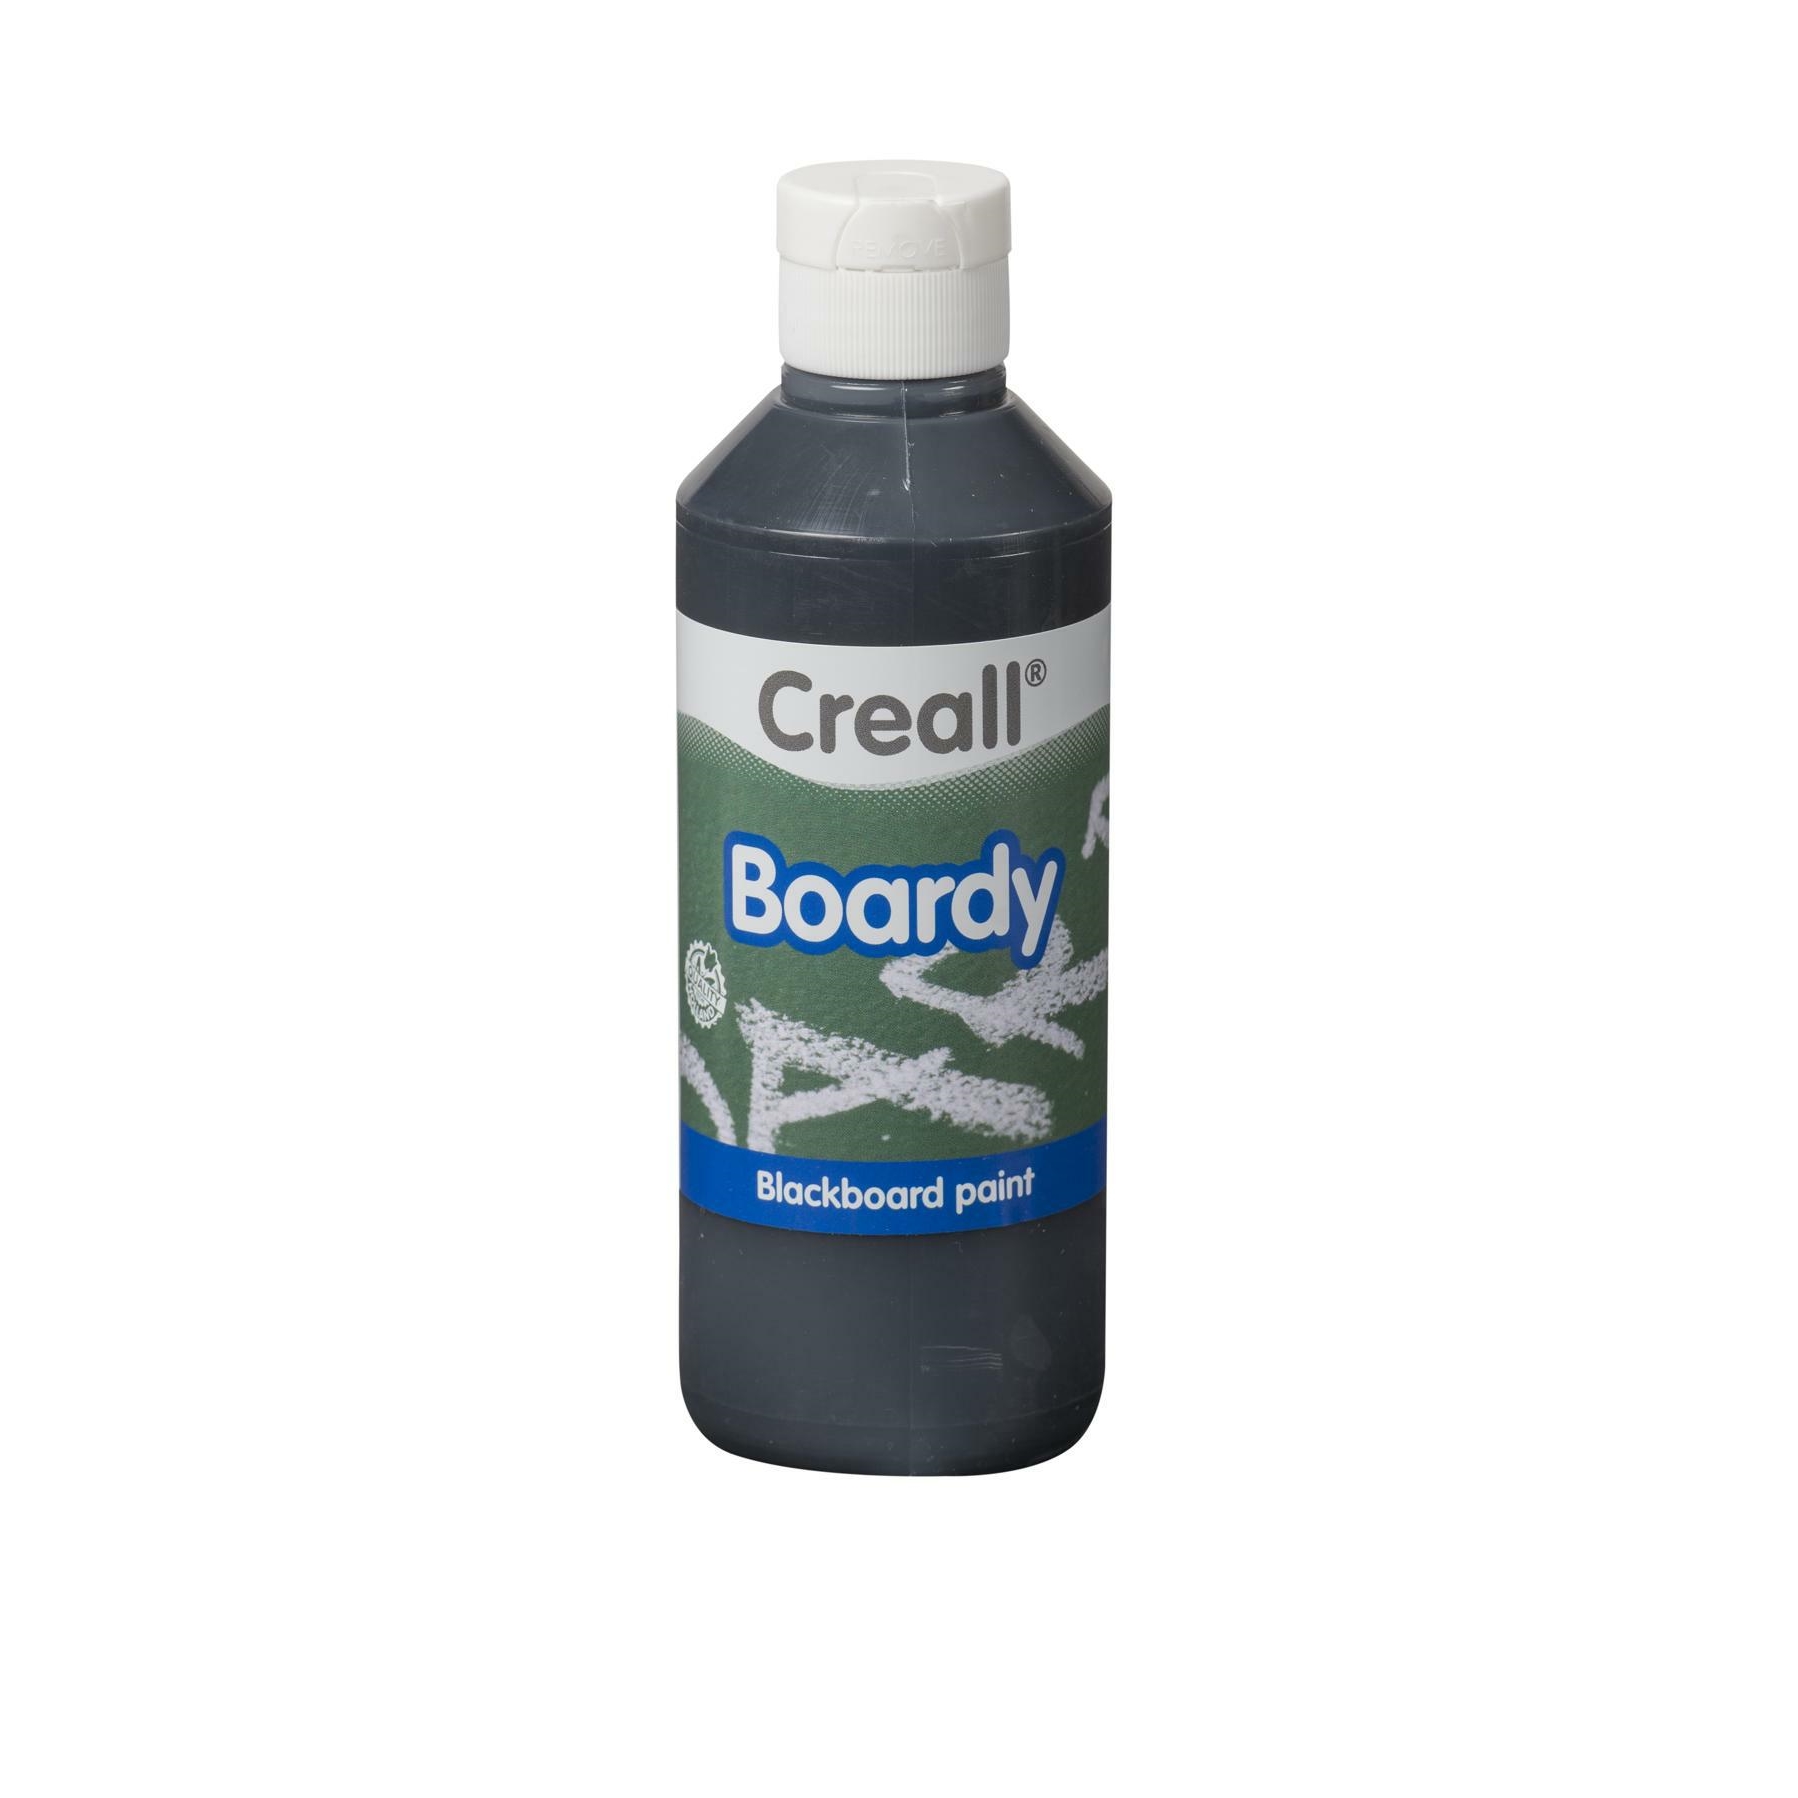 Tabulová barva Creall Boardy 250ml, černá